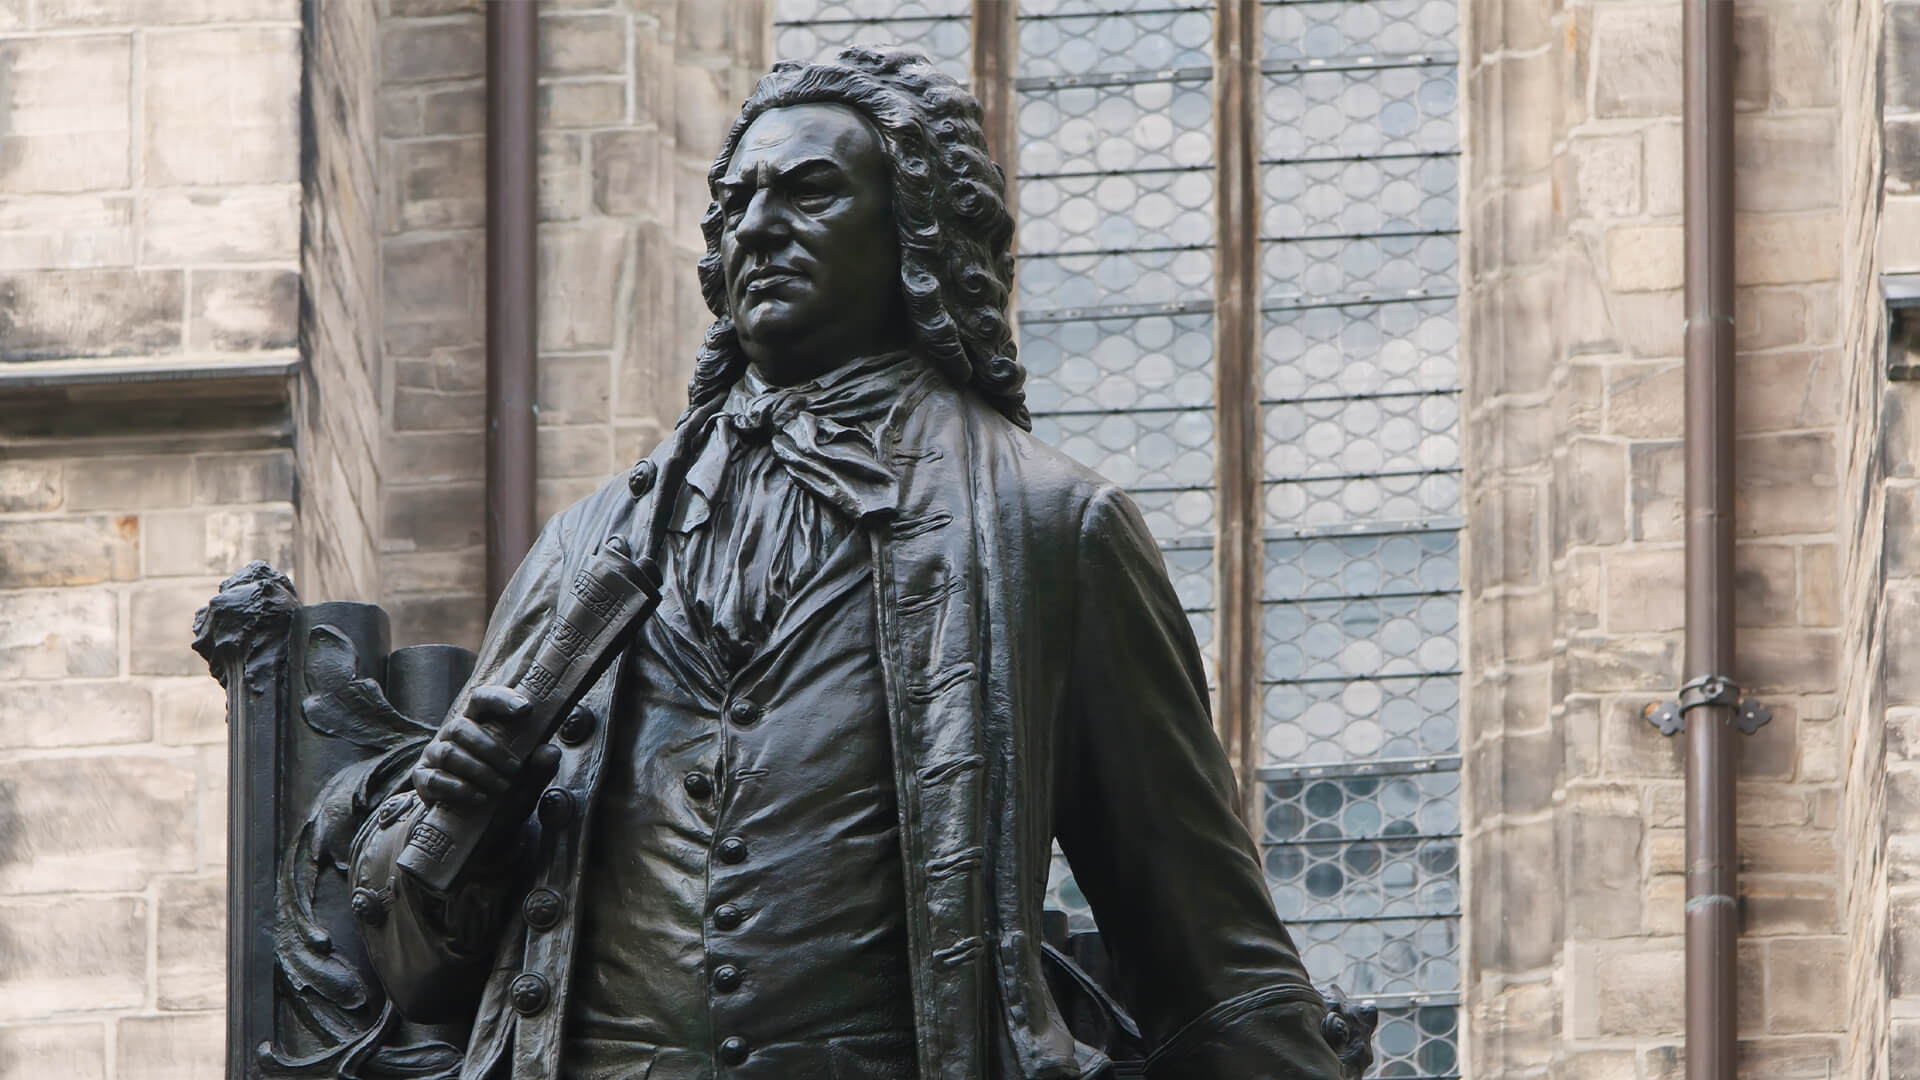 Johann Sebastian Bach A Duelling Fighting Harddrinking Rock Star Turns  336  HowStuffWorks